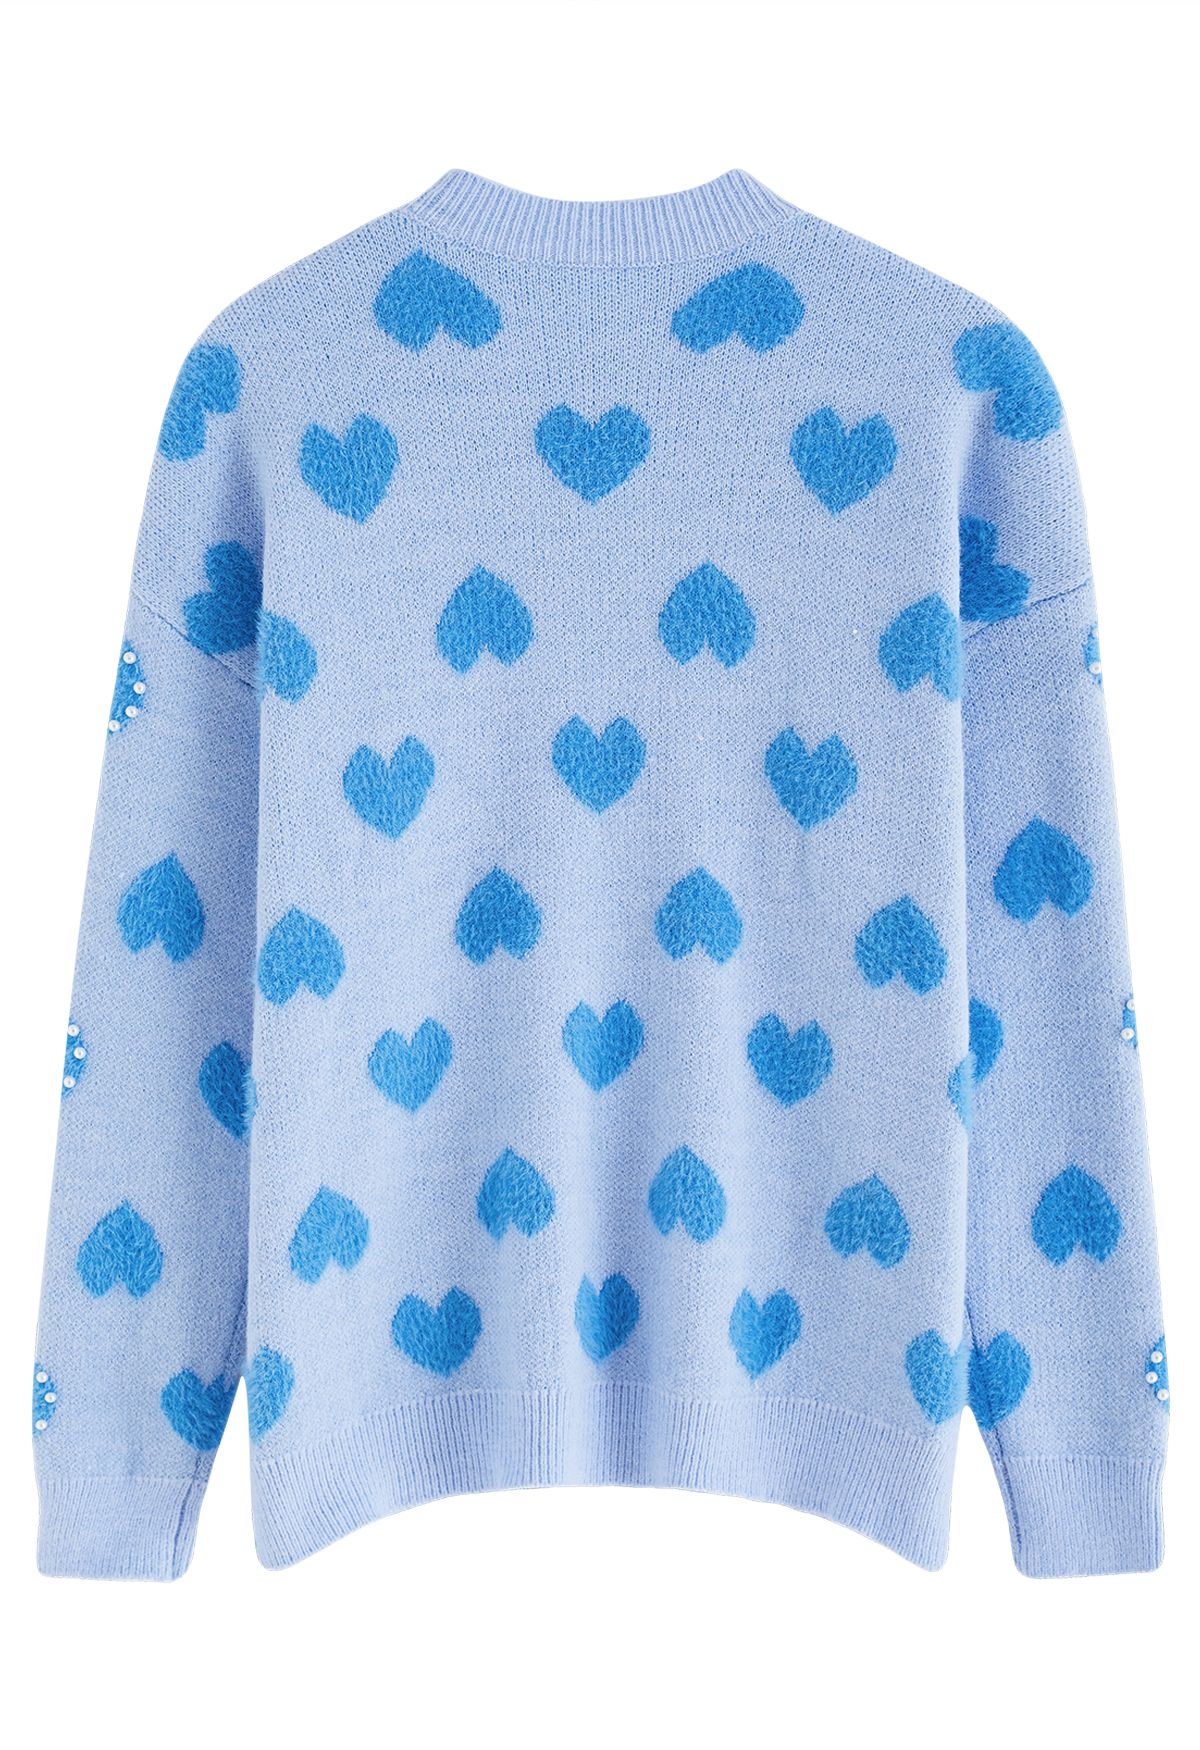 Pearl Trim Fluffy Heart Knit Sweater in Blue